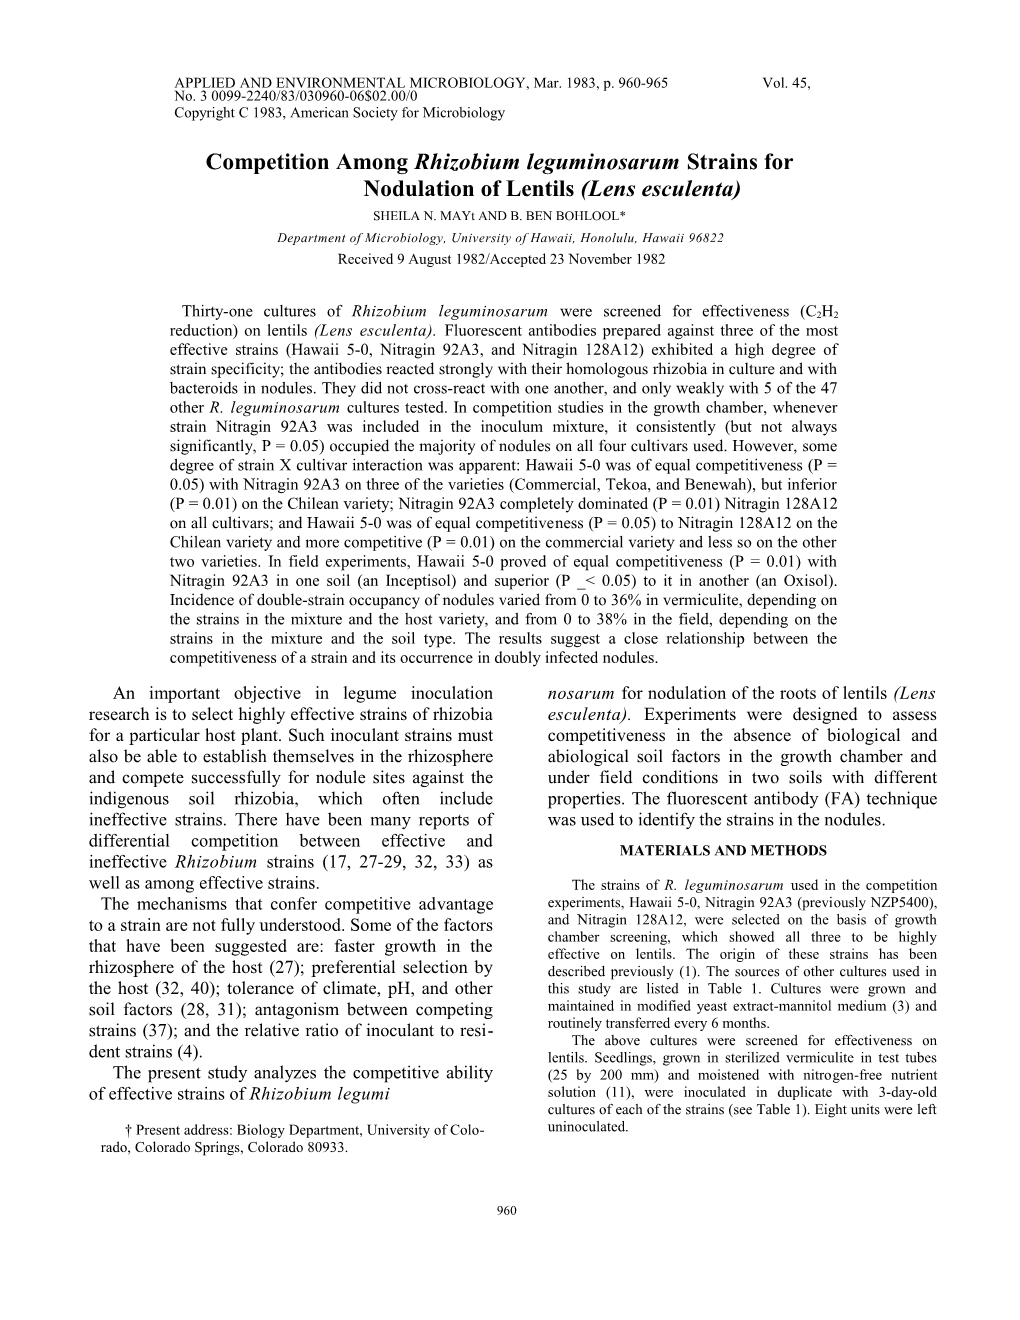 Competition Among Rhizobium Leguminosarum Strains for Nodulation of Lentils (Lens Esculenta)